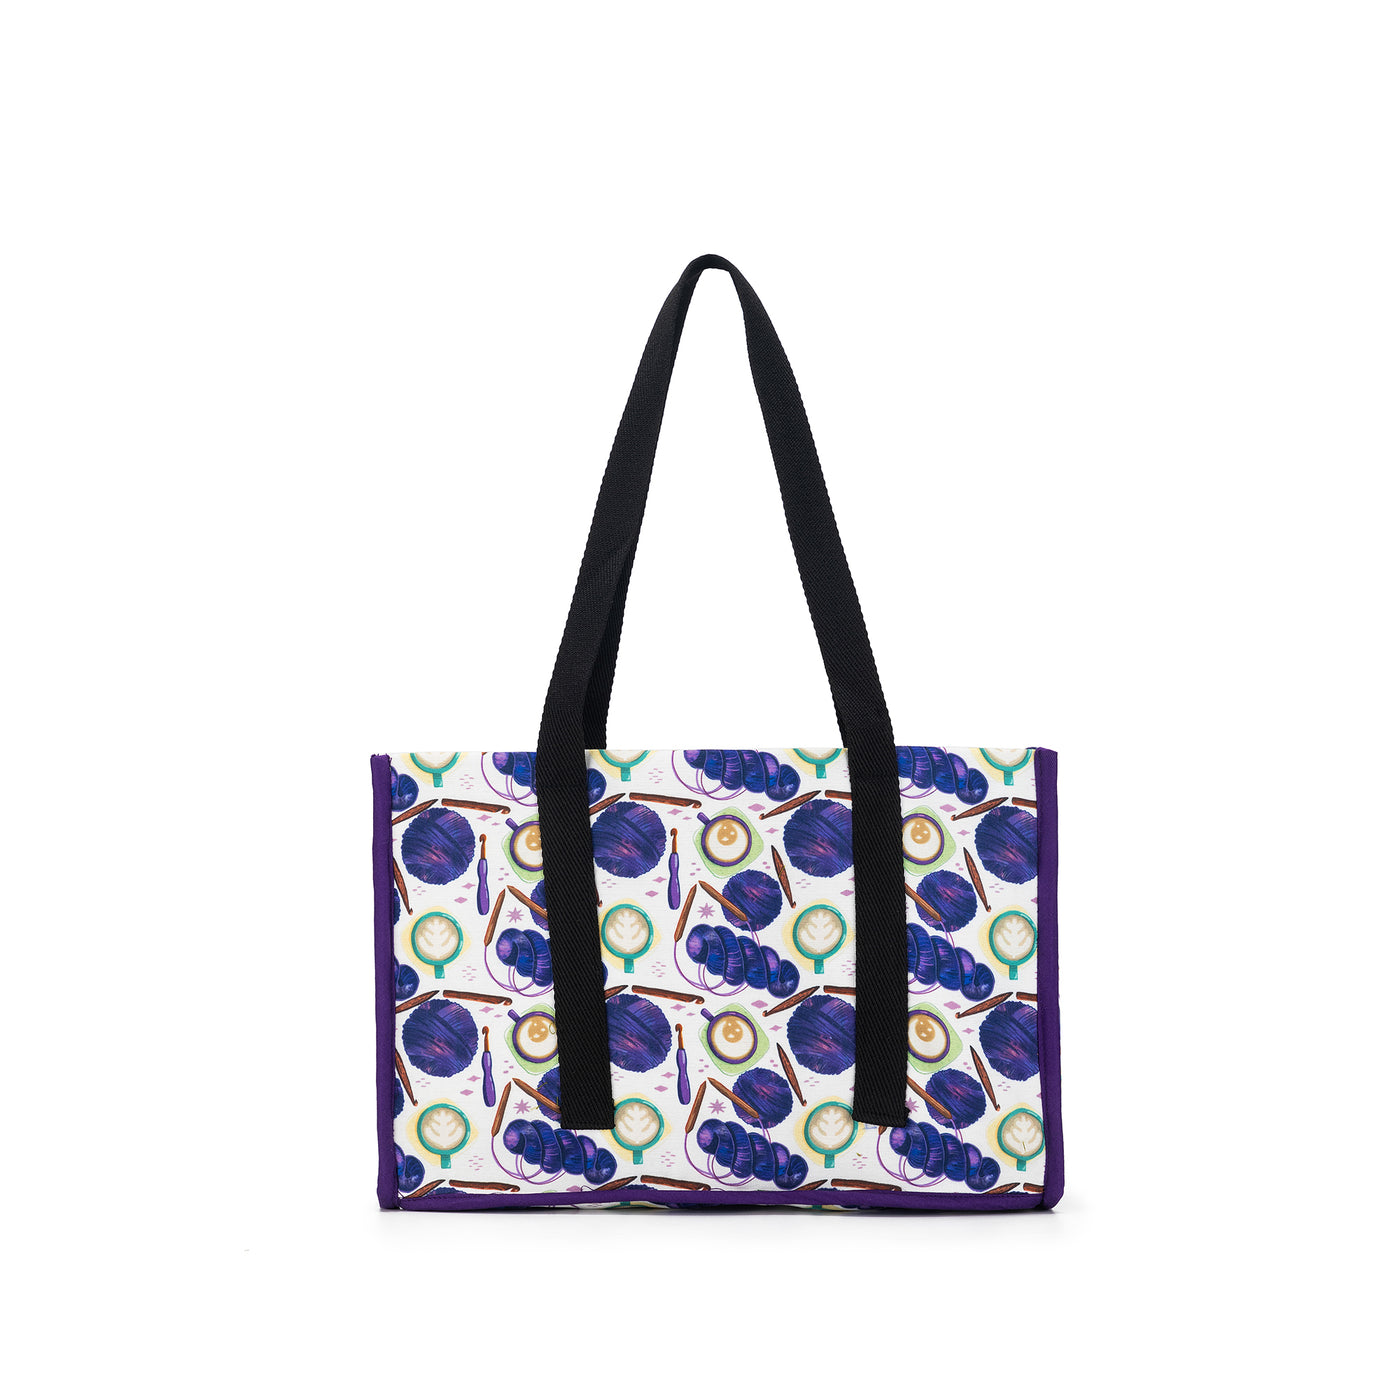 Project Bag | Coffee and Yarn Purple